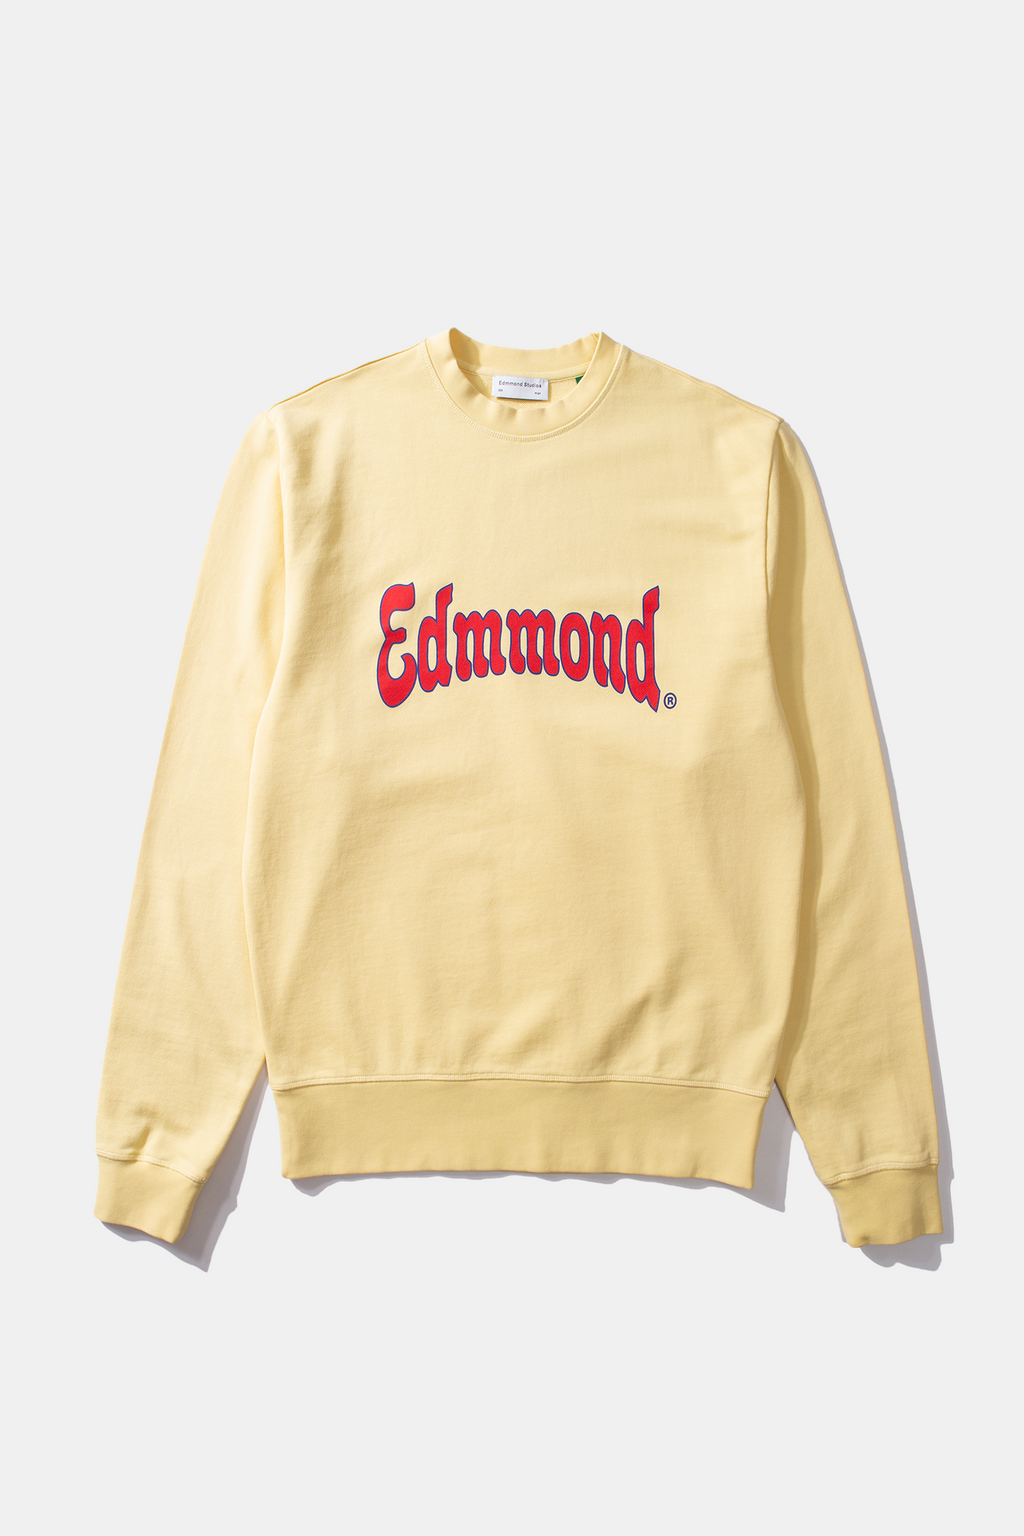 Edmmond Studios Curly Plain Yellow